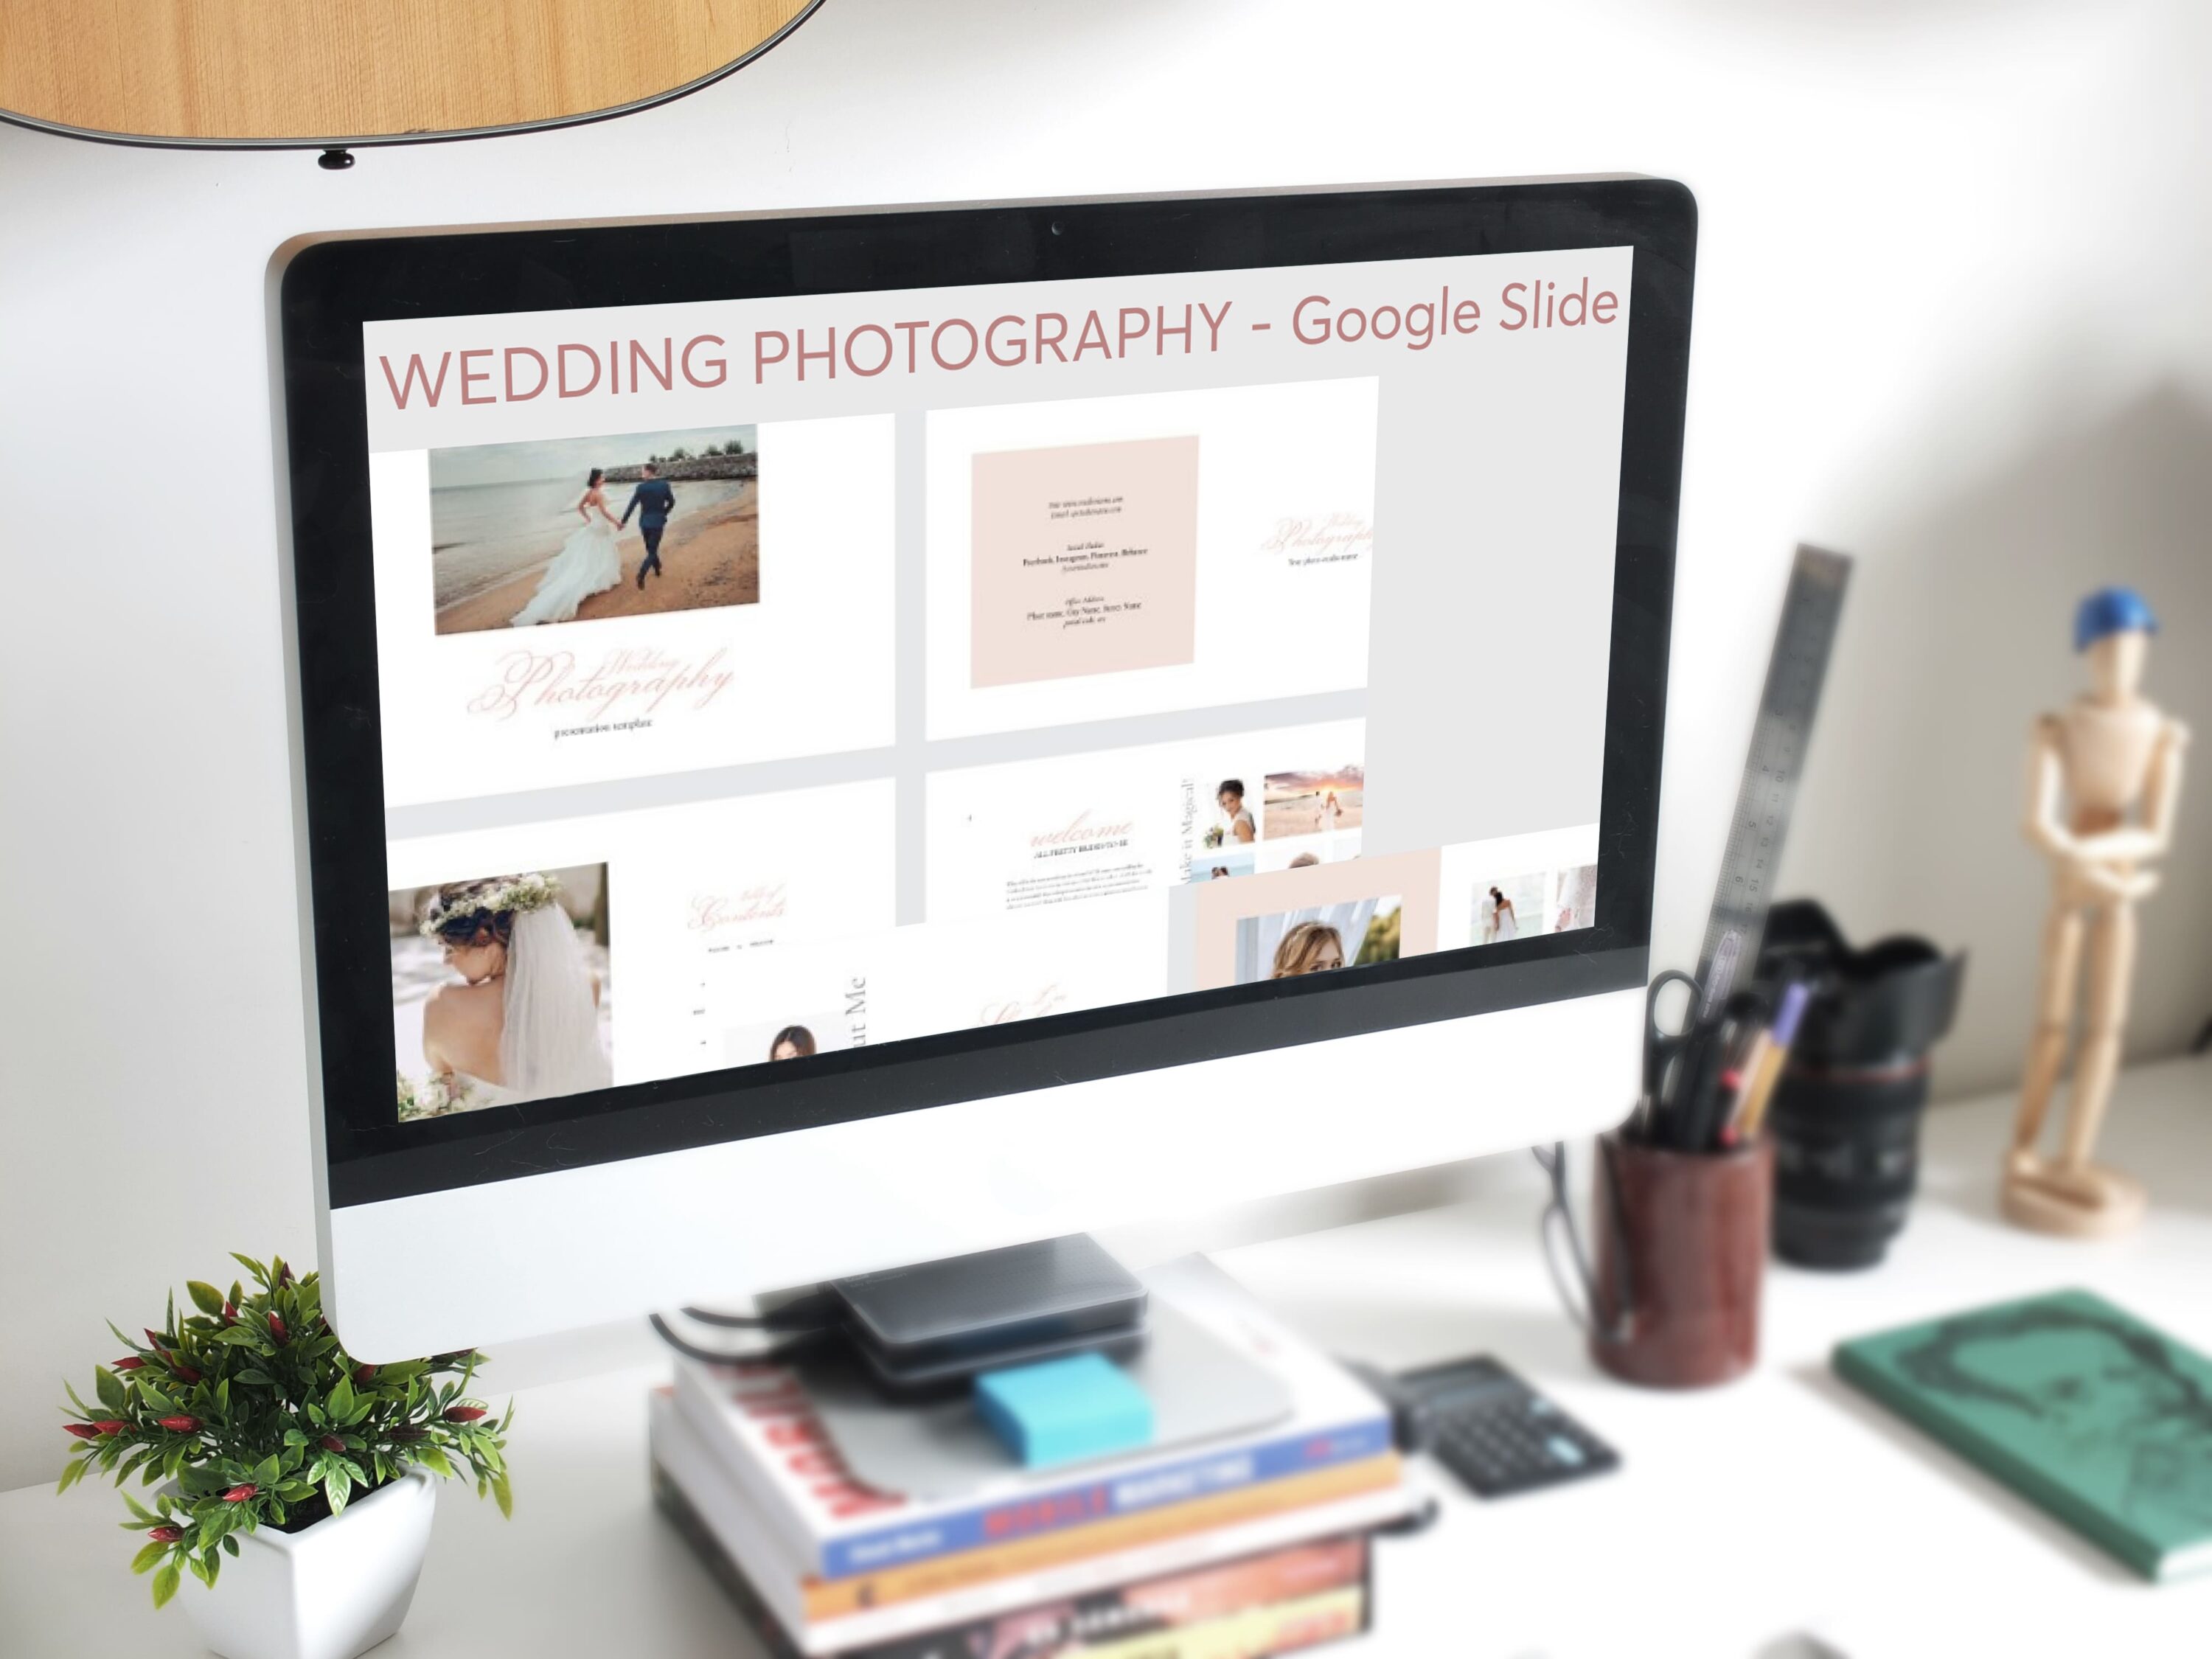 WEDDING PHOTOGRAPHY - Google Slide - desktop.